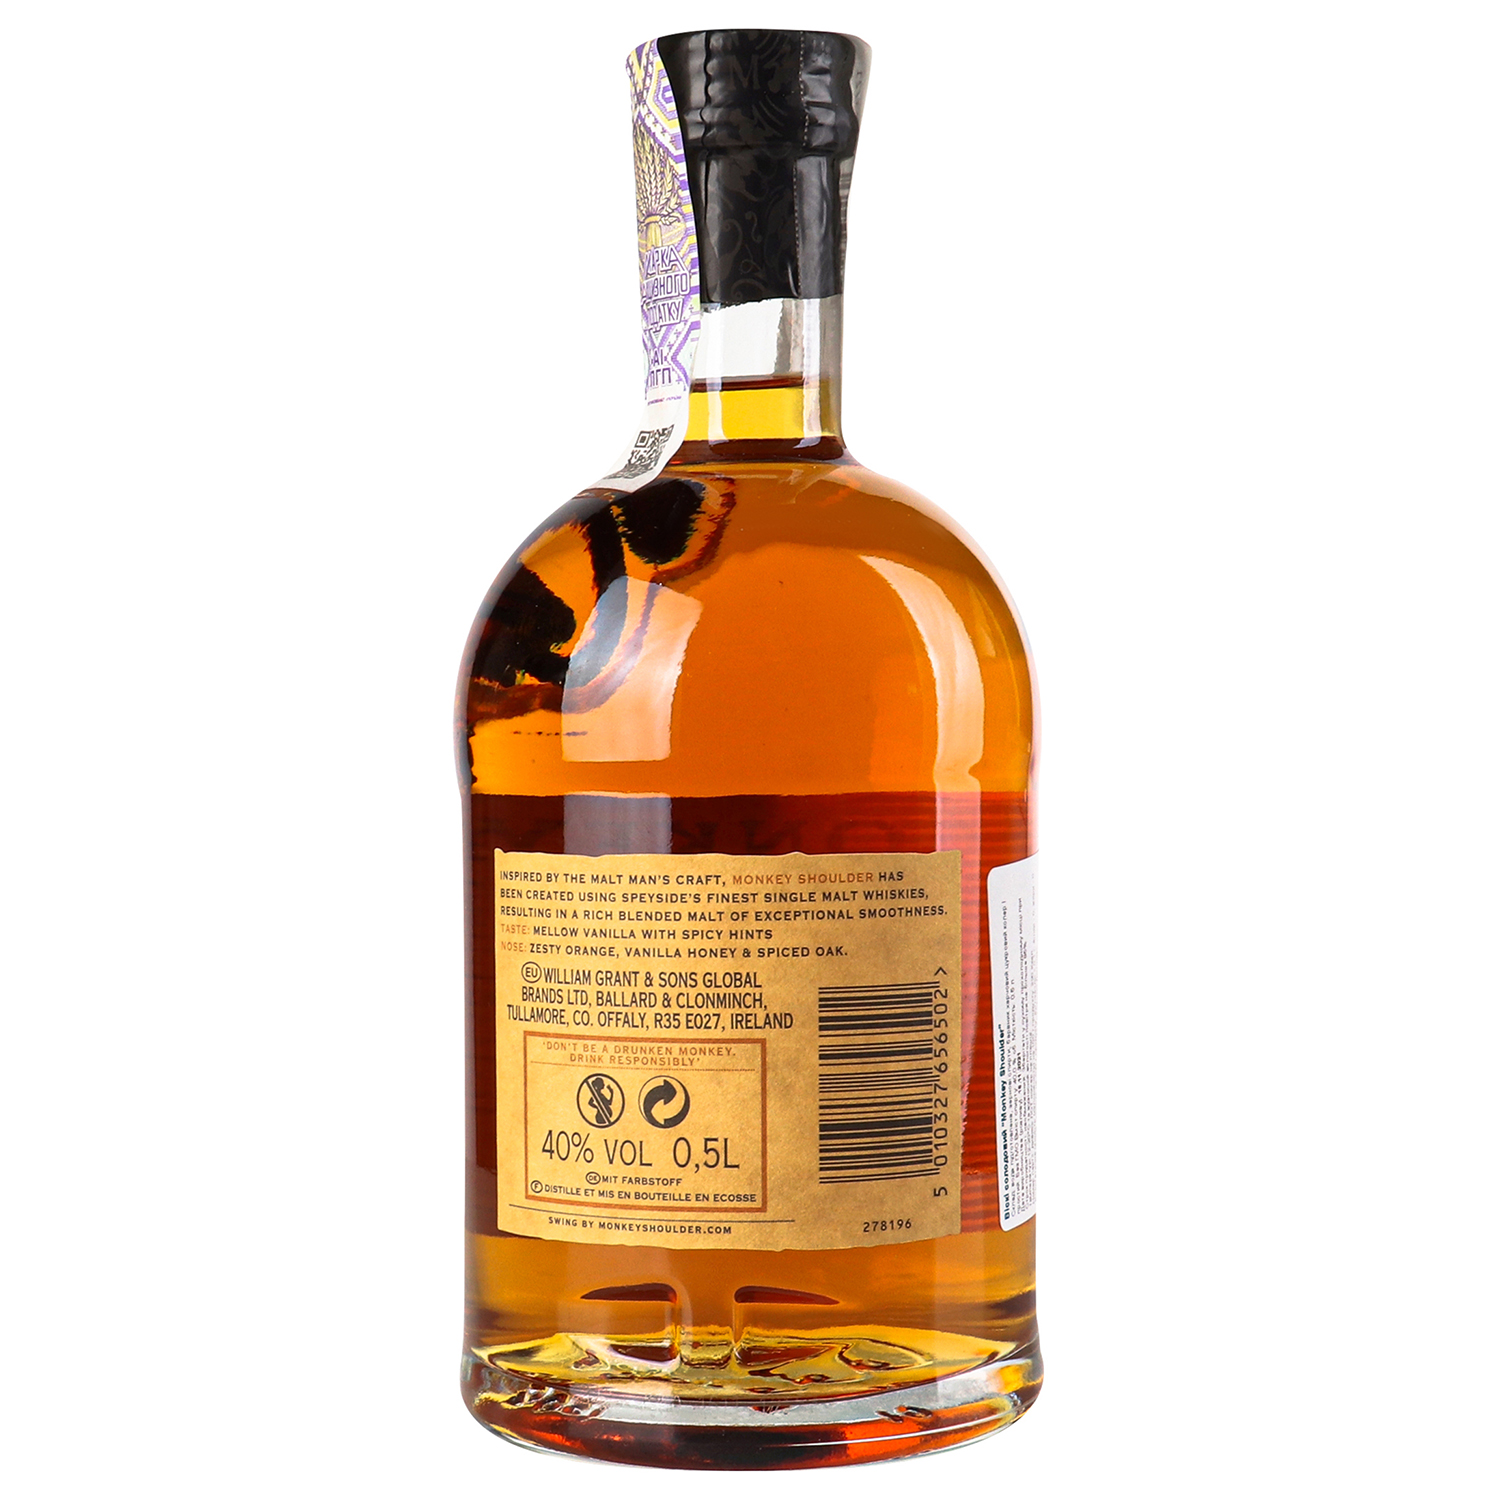 Віски Monkey Shoulder Blended Malt Scotch Whisky, 40%, 0,5 л - фото 4